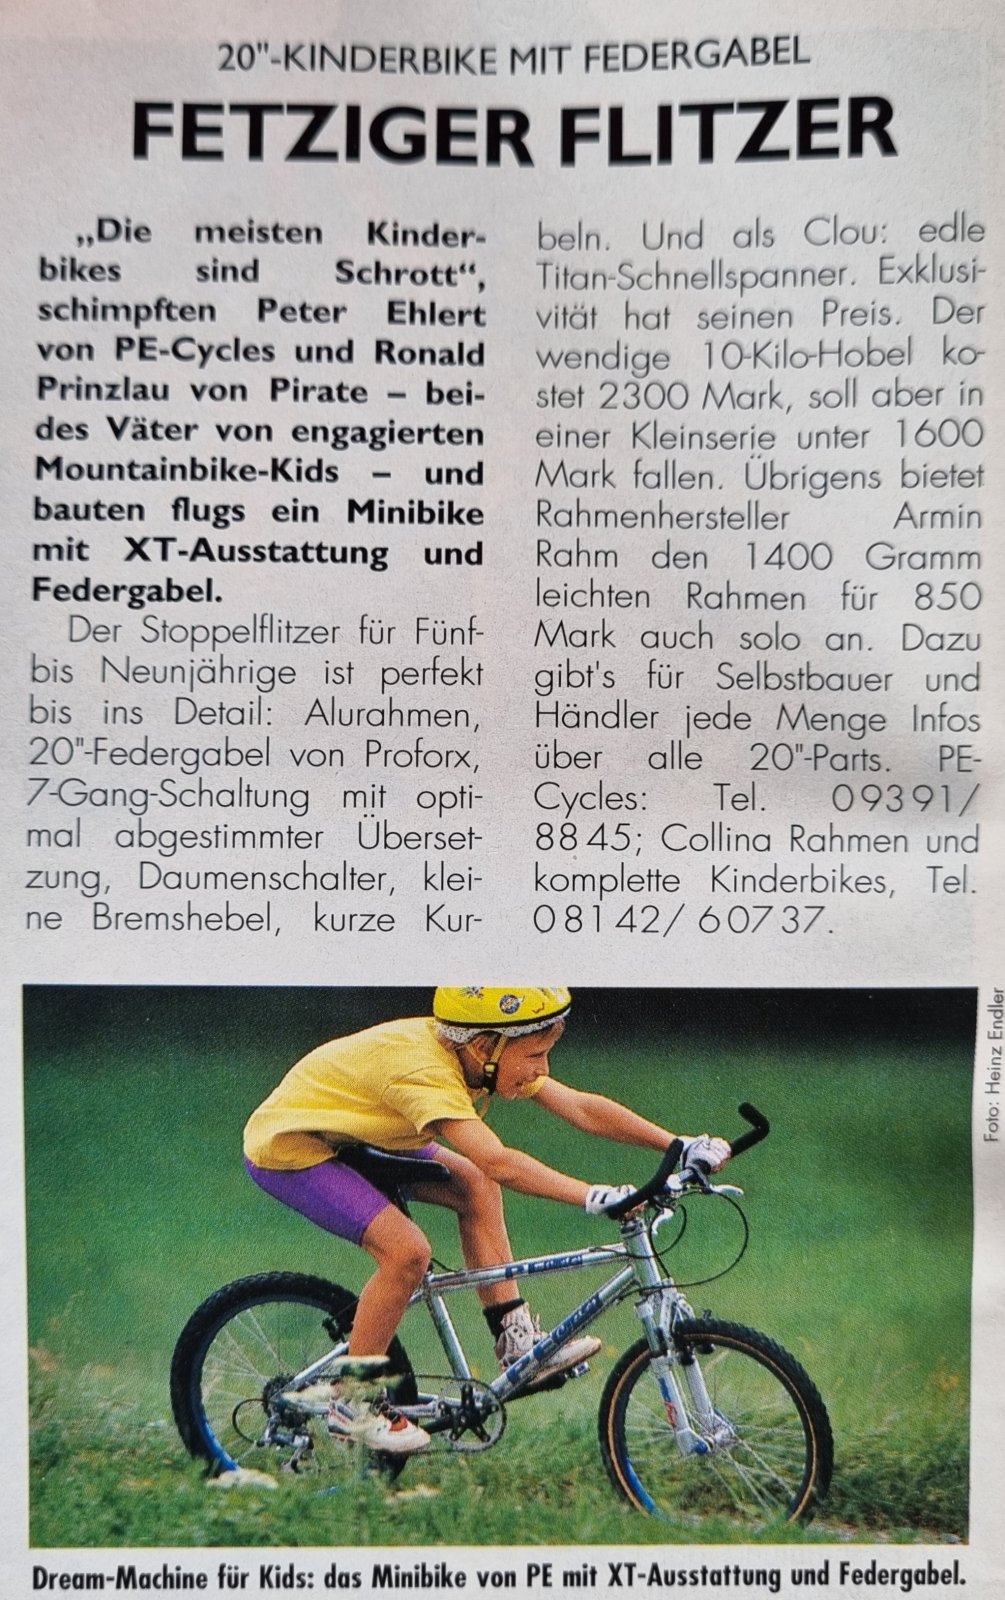 PE cycles Pirate Armin Rahm Collina Proforx aus Bike 1993 09.jpg